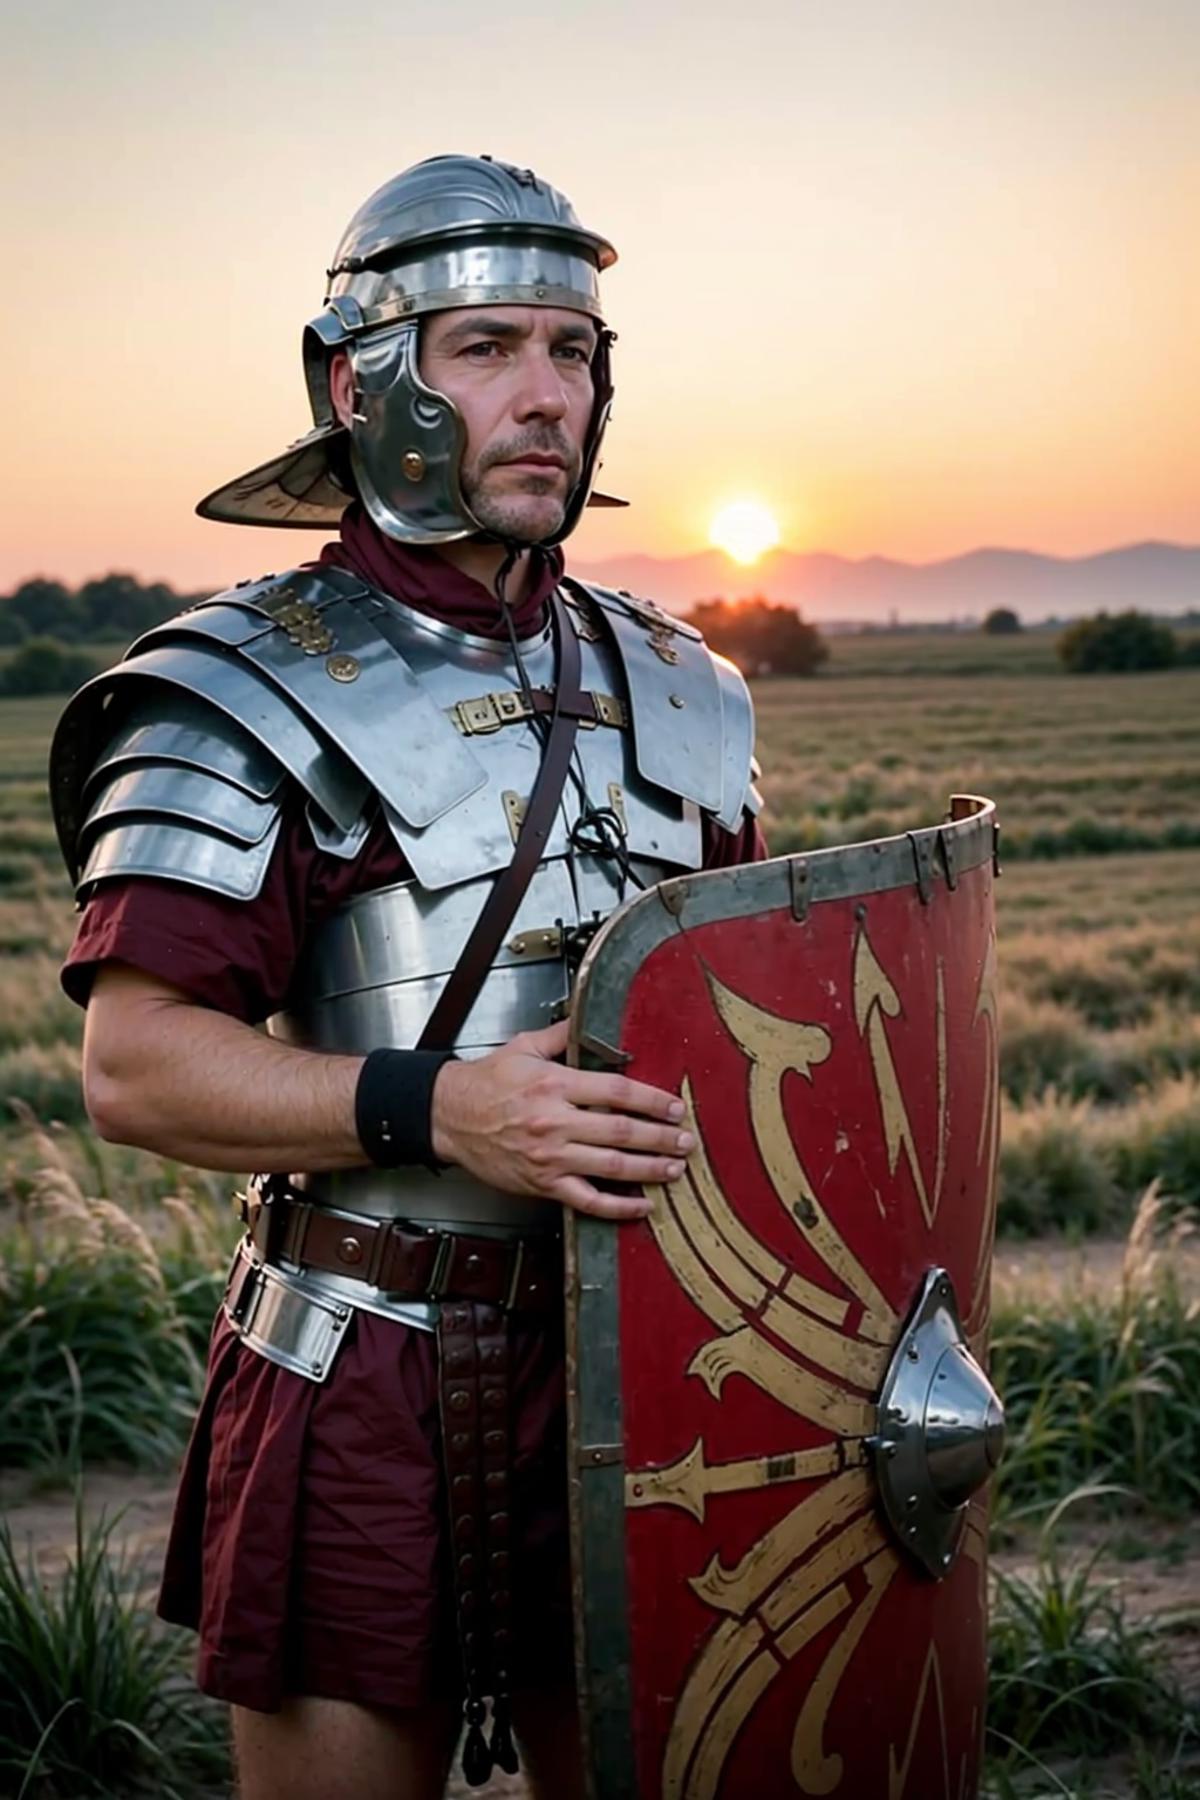 Roman Legionary - Lorica Segmentata Armor image by MelmothTheWanderer